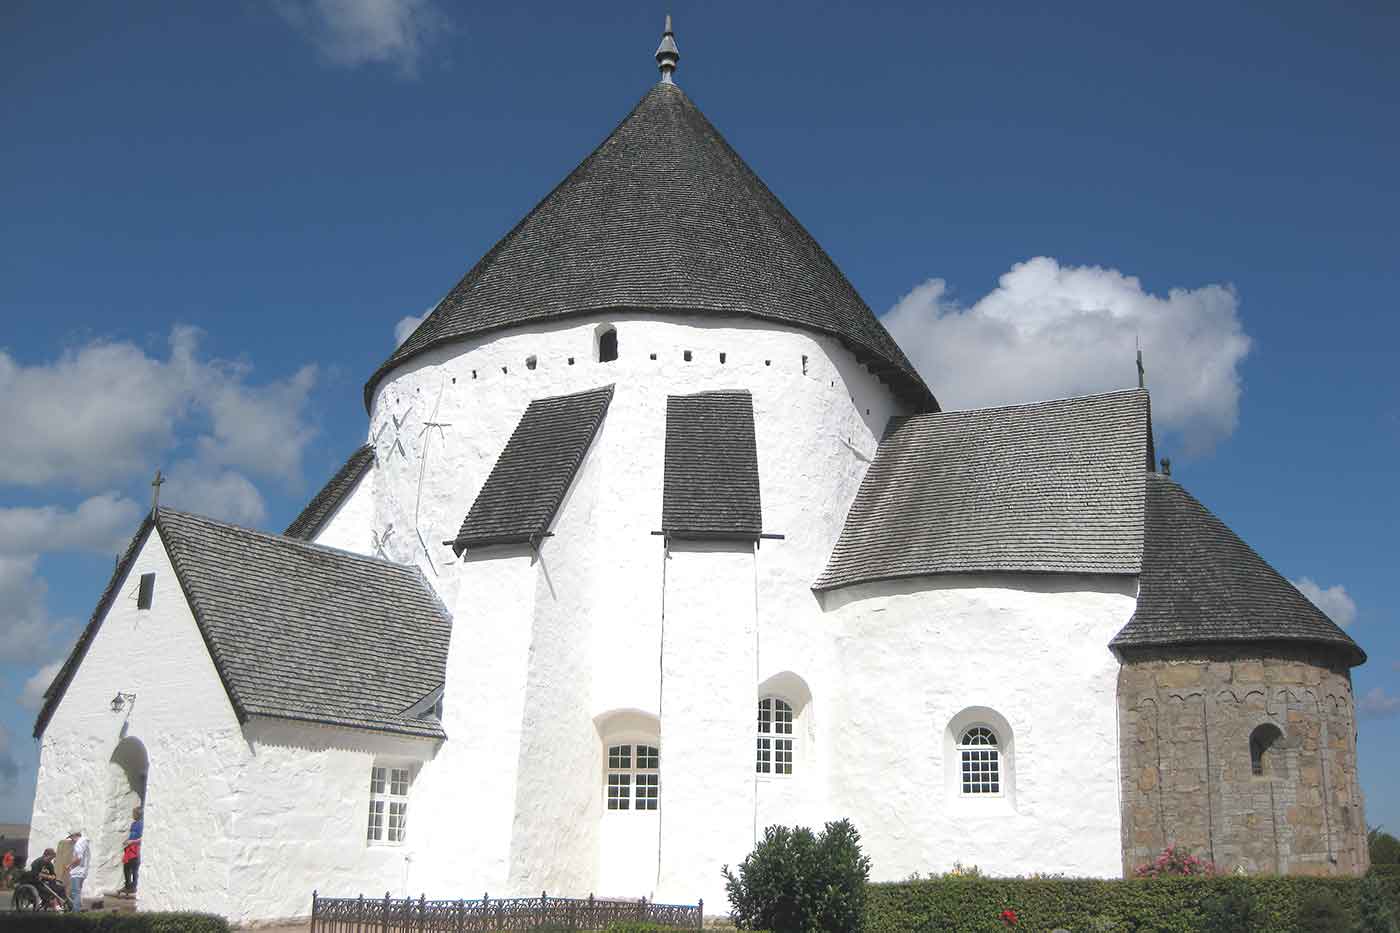 Østerlars Church